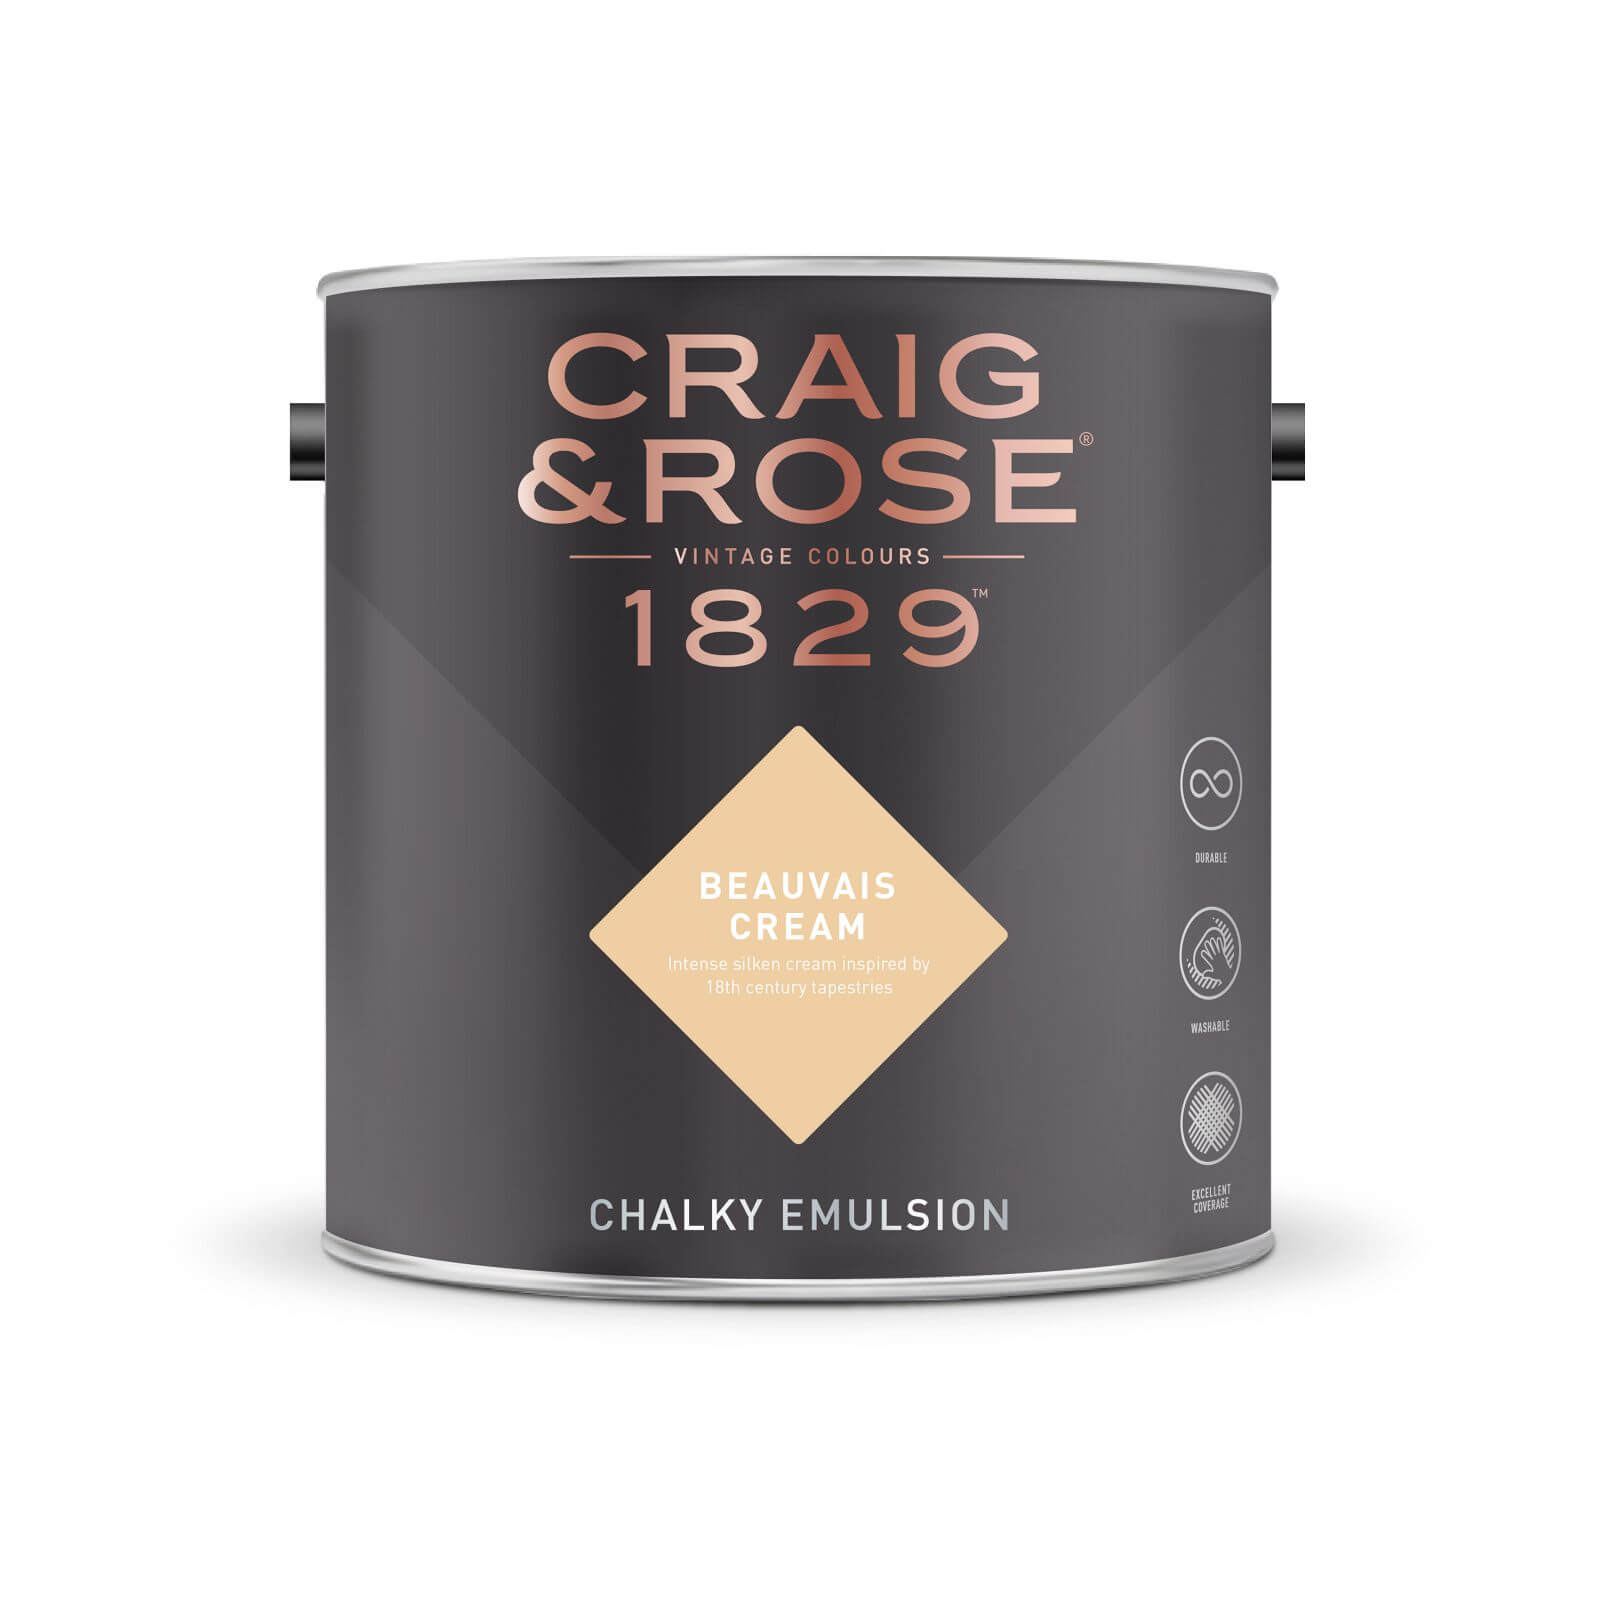 Craig & Rose 1829 Chalky Emulsion Paint Beauvais Cream - 5L